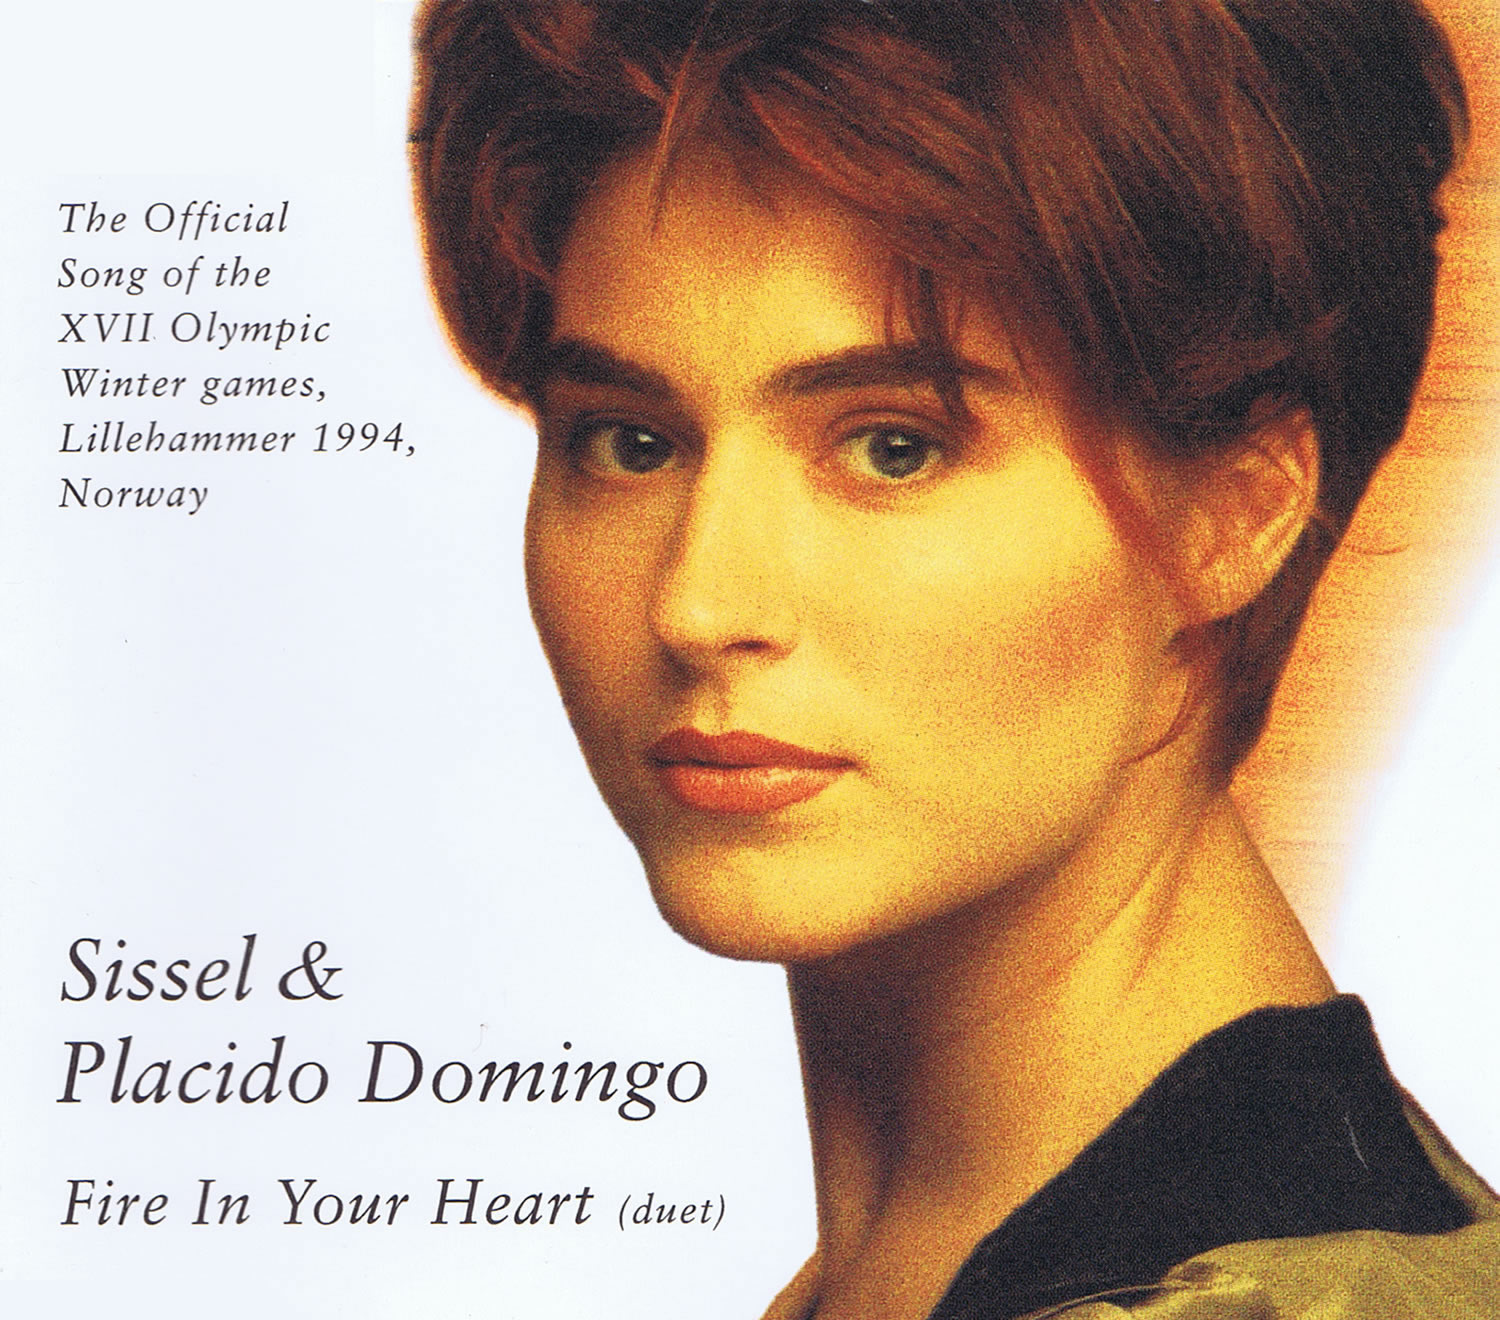 Sissel & Plácido Domingo Fire In Your Heart cover artwork